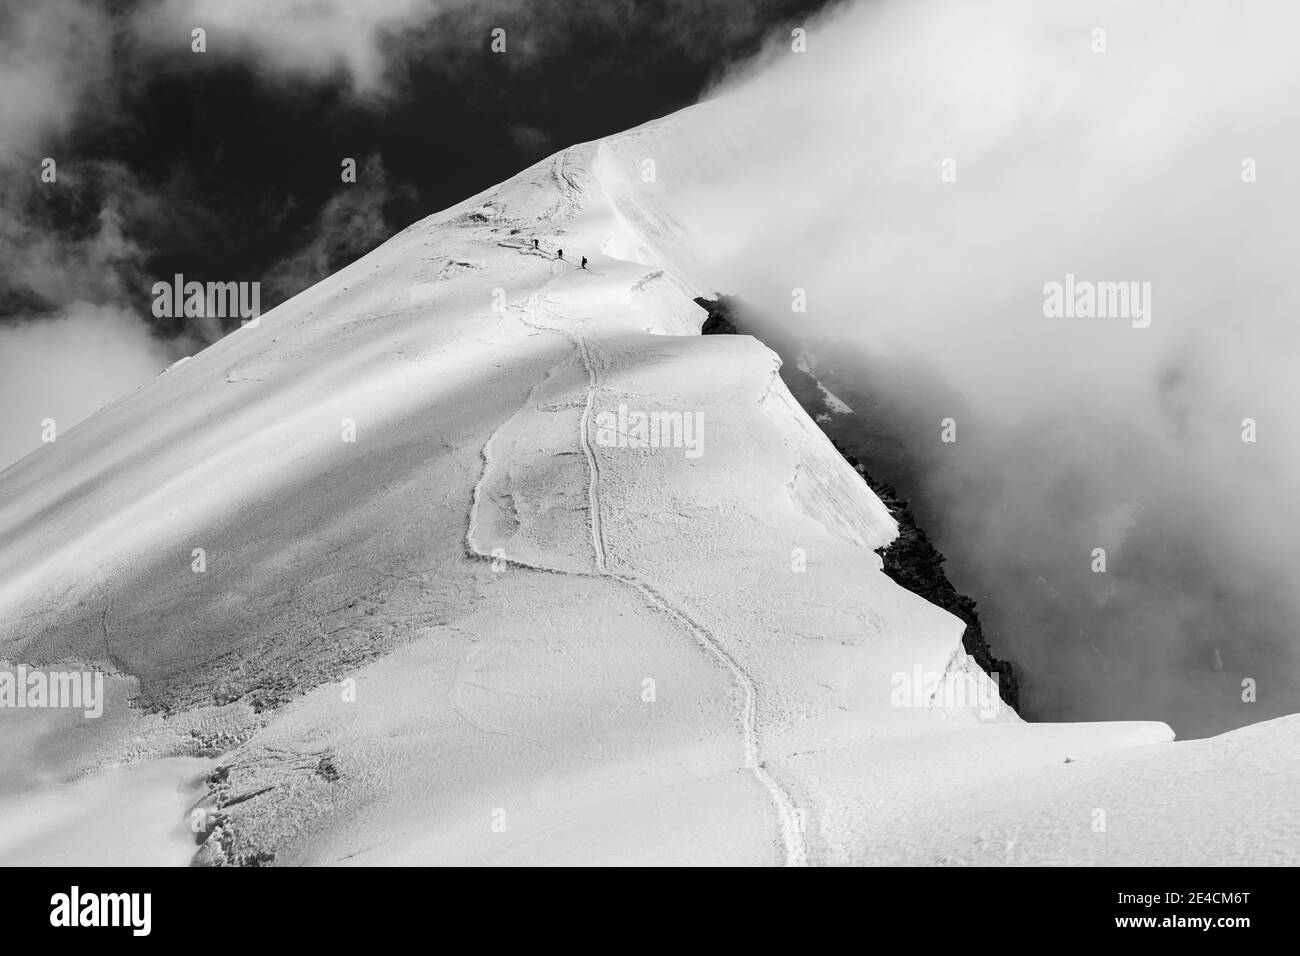 Switzerland, Canton of Valais, Saas Valley, Saas-Grund, mountaineers on the ascent of Weissmies west ridge Stock Photo